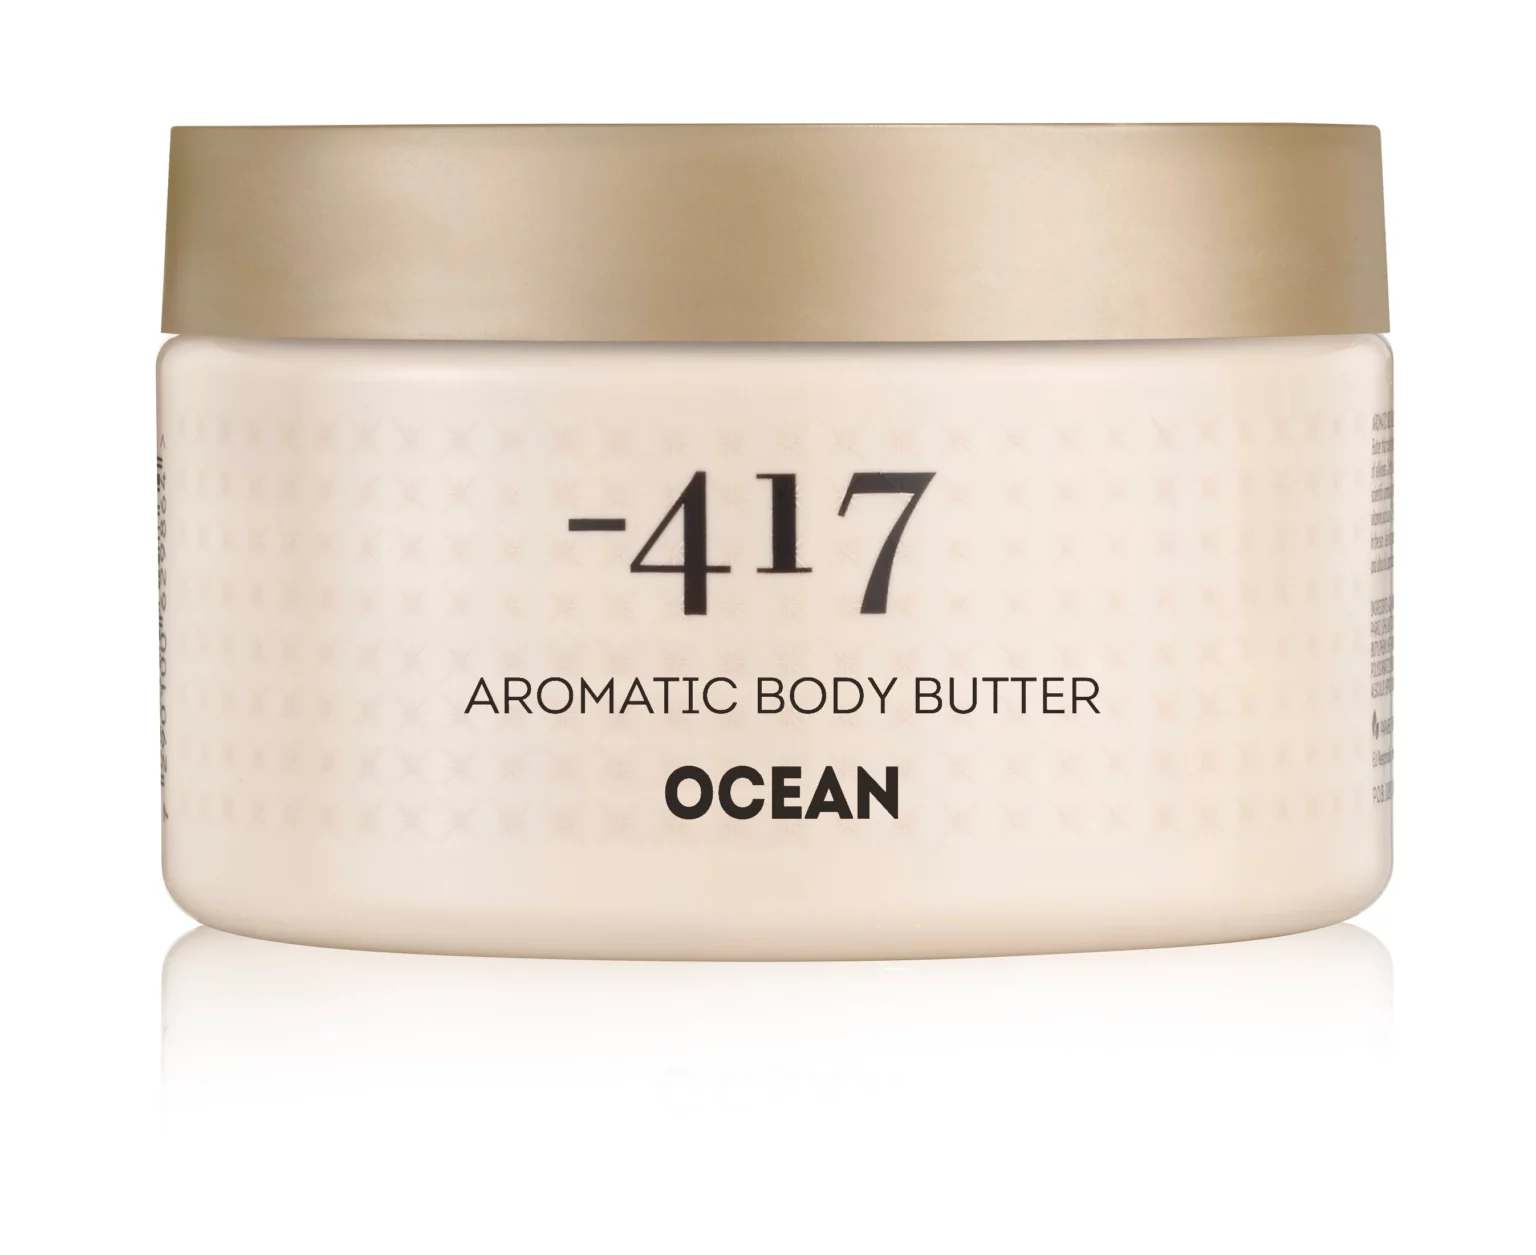 Aromatic Deep Nutrition Body Butter - Ocean -417